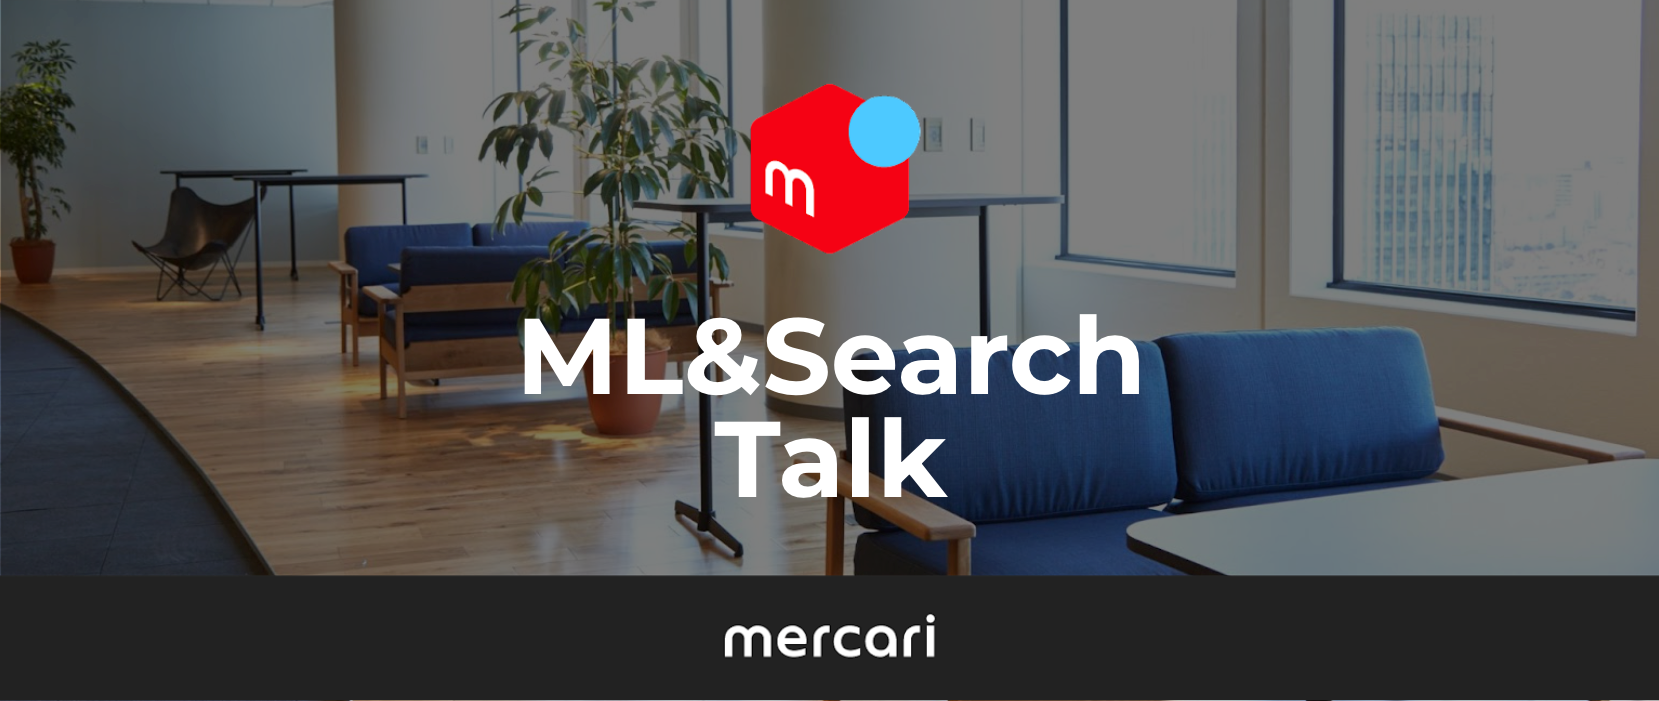 Mercari ML&#038;Search Talk #2 ~Customer Understanding~を開催しました #mercari_ai